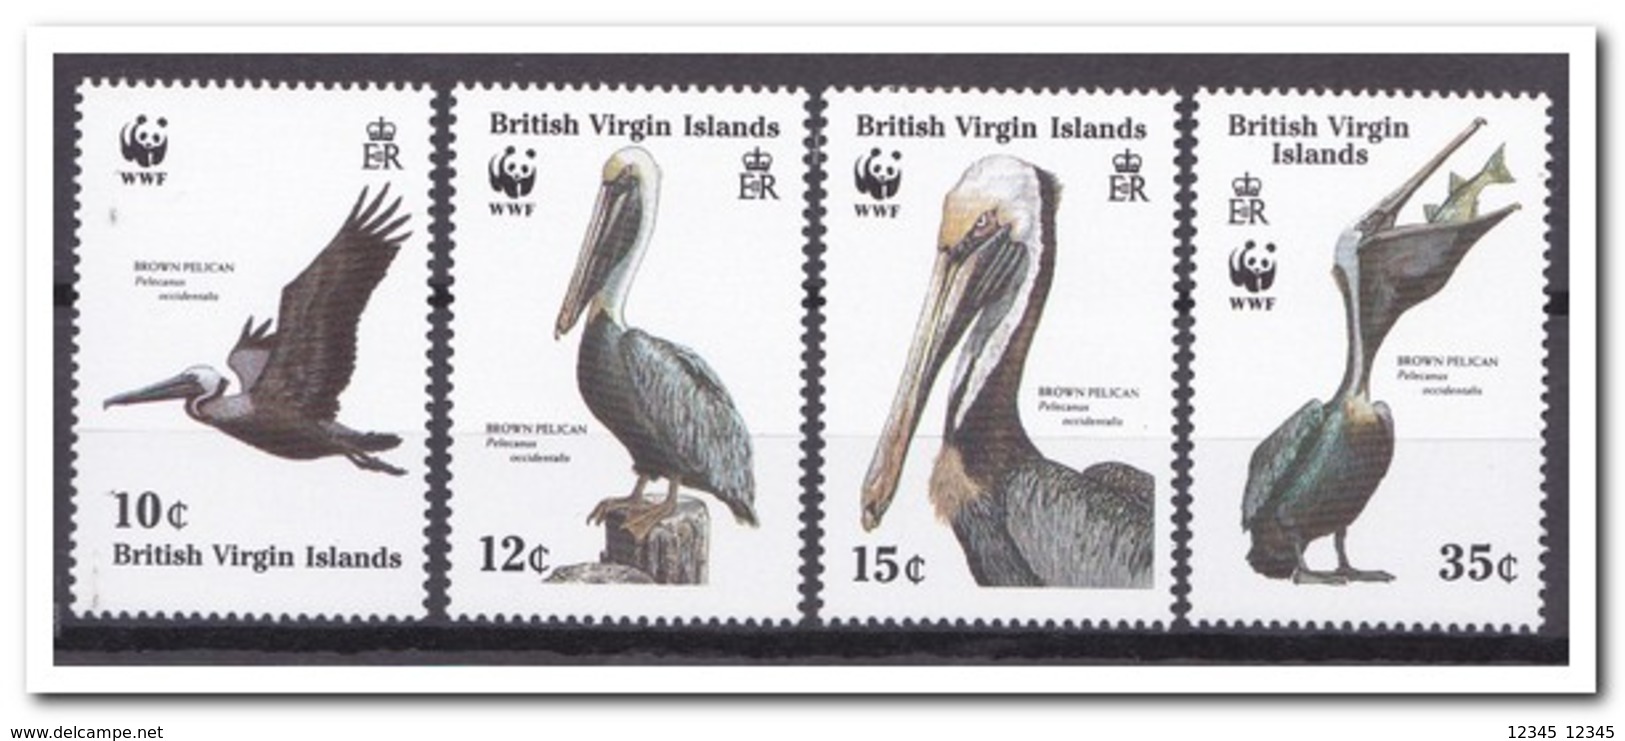 Britse Maagdeneilanden 1988, Postfris MNH, Birds, WWF - British Virgin Islands